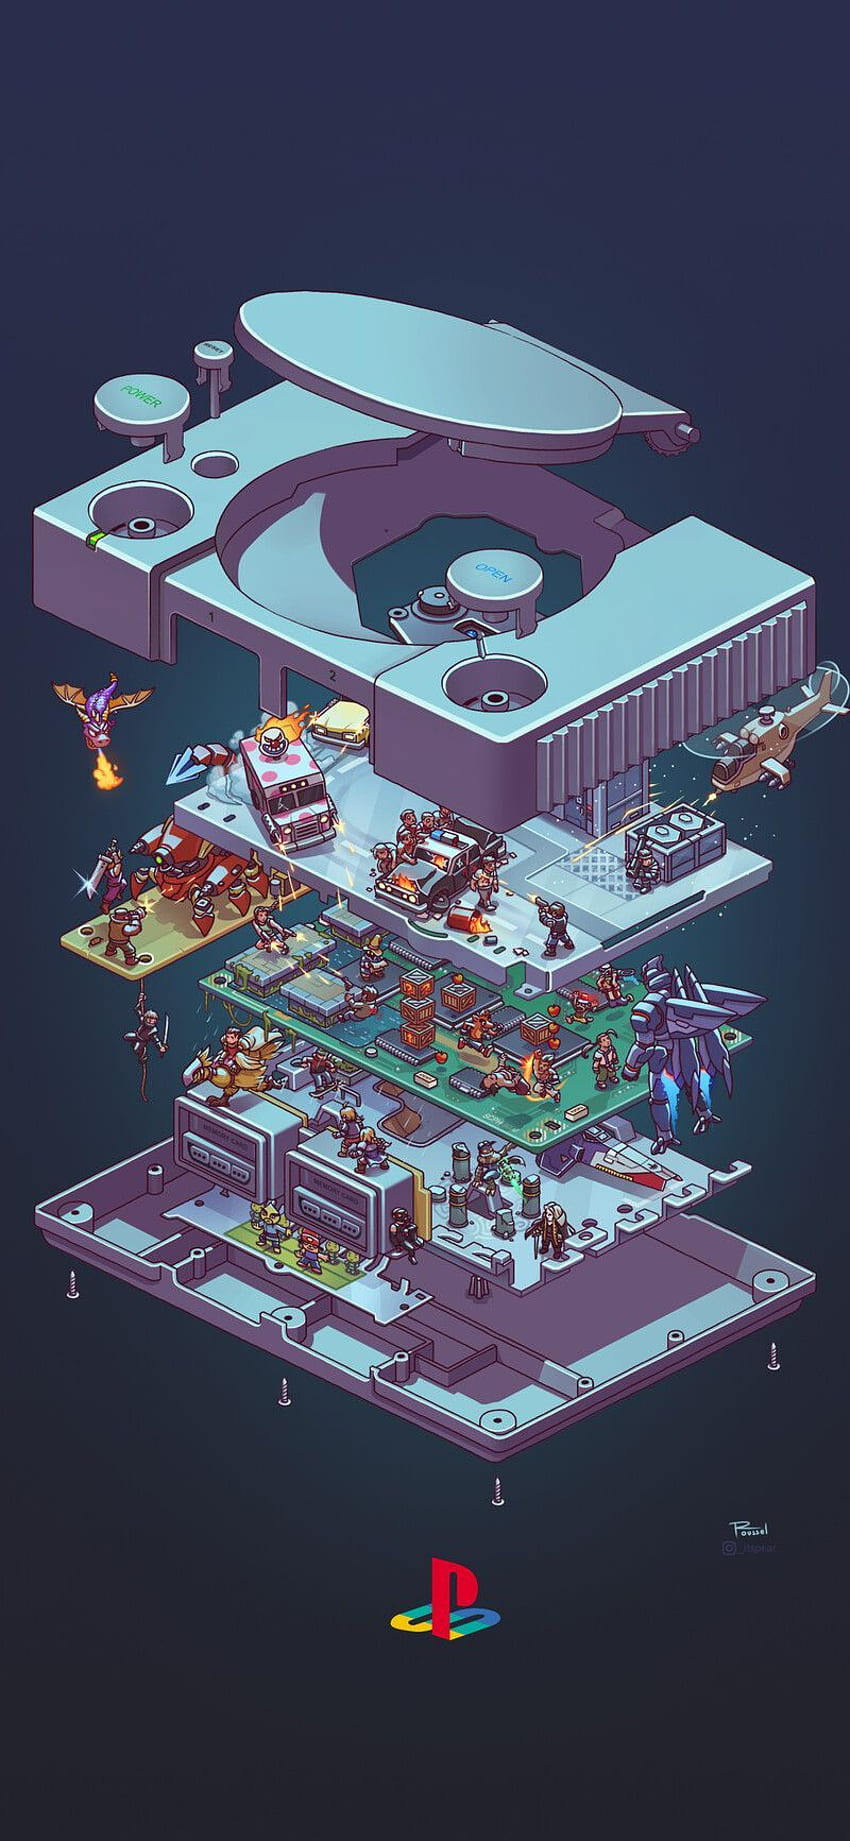 ArtStation - Eksplozja konsoli, Pierre Roussel w 2020 r. Sztuka retro gier wideo, Gry, Fajne na telefony, Geek Tapeta na telefon HD